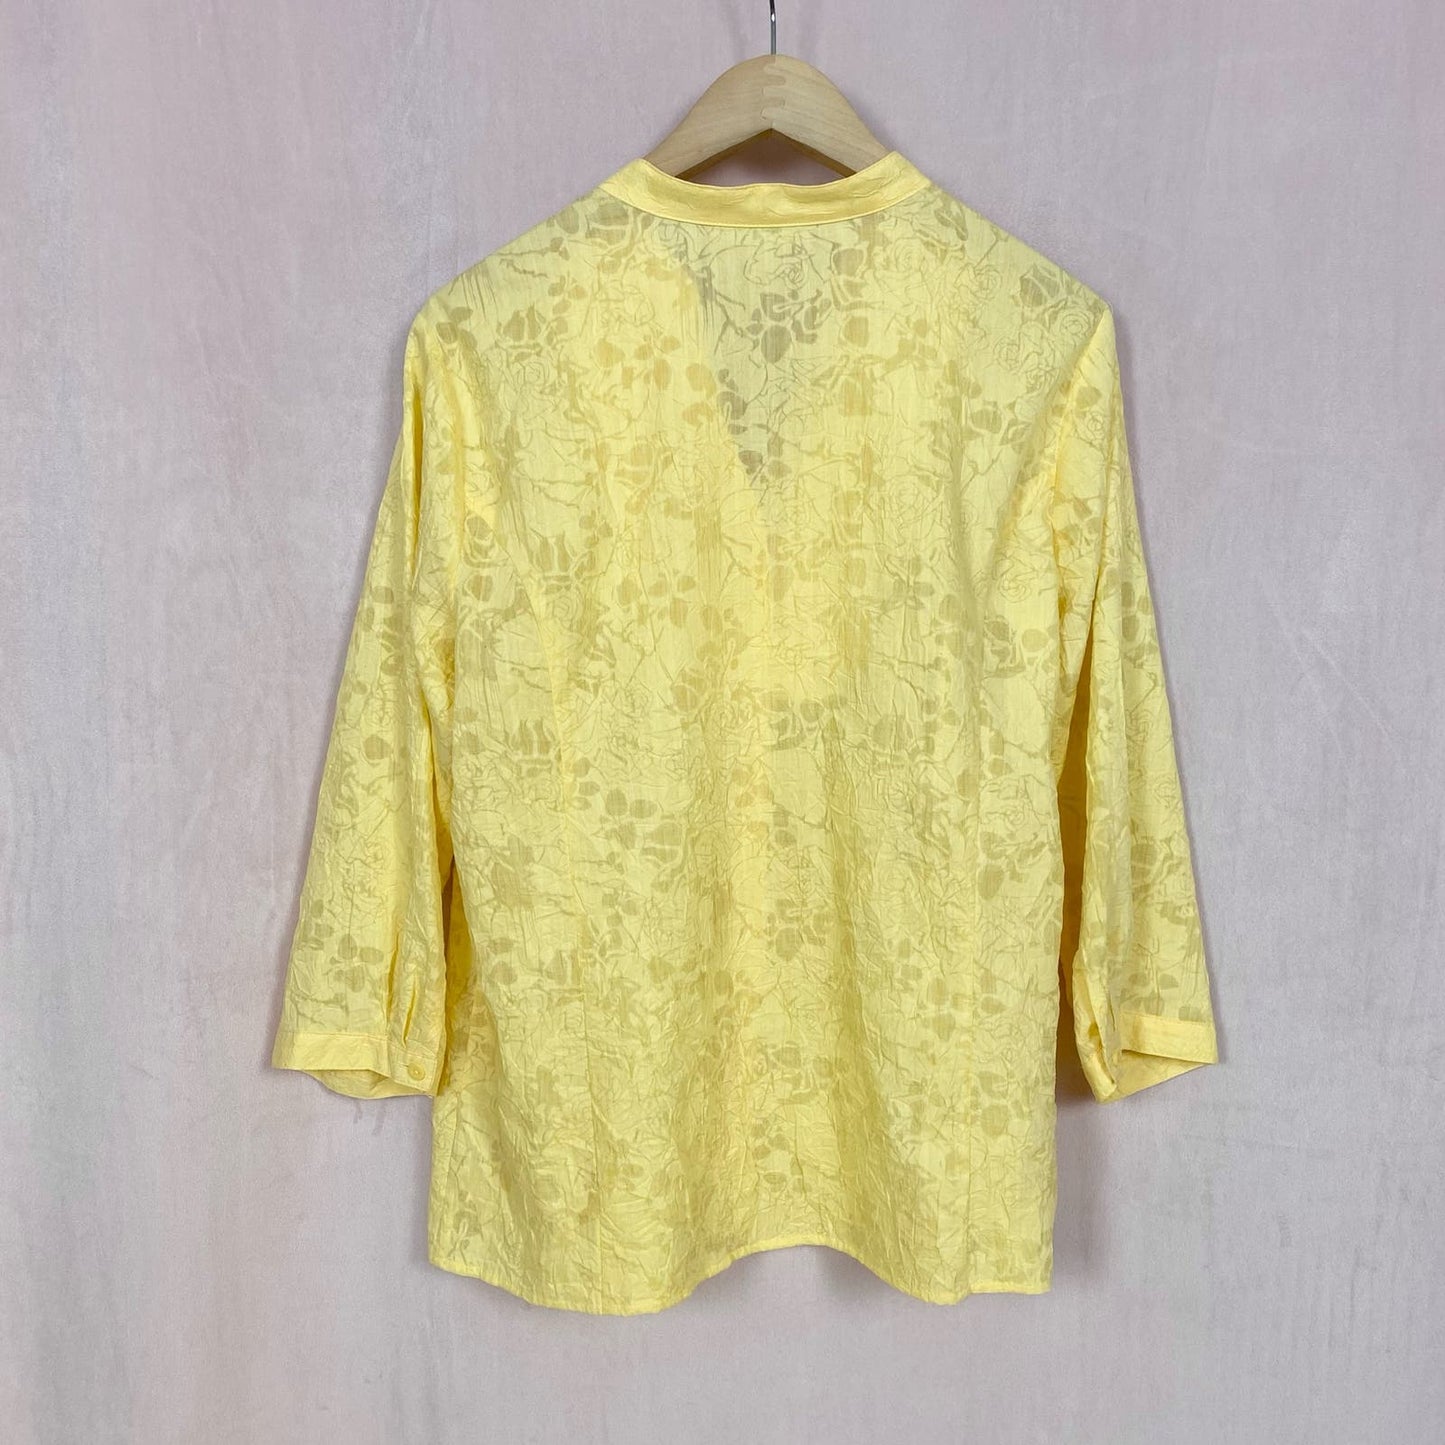 Secondhand JM Collection Yellow Floral Button Front Blouse, Size 14